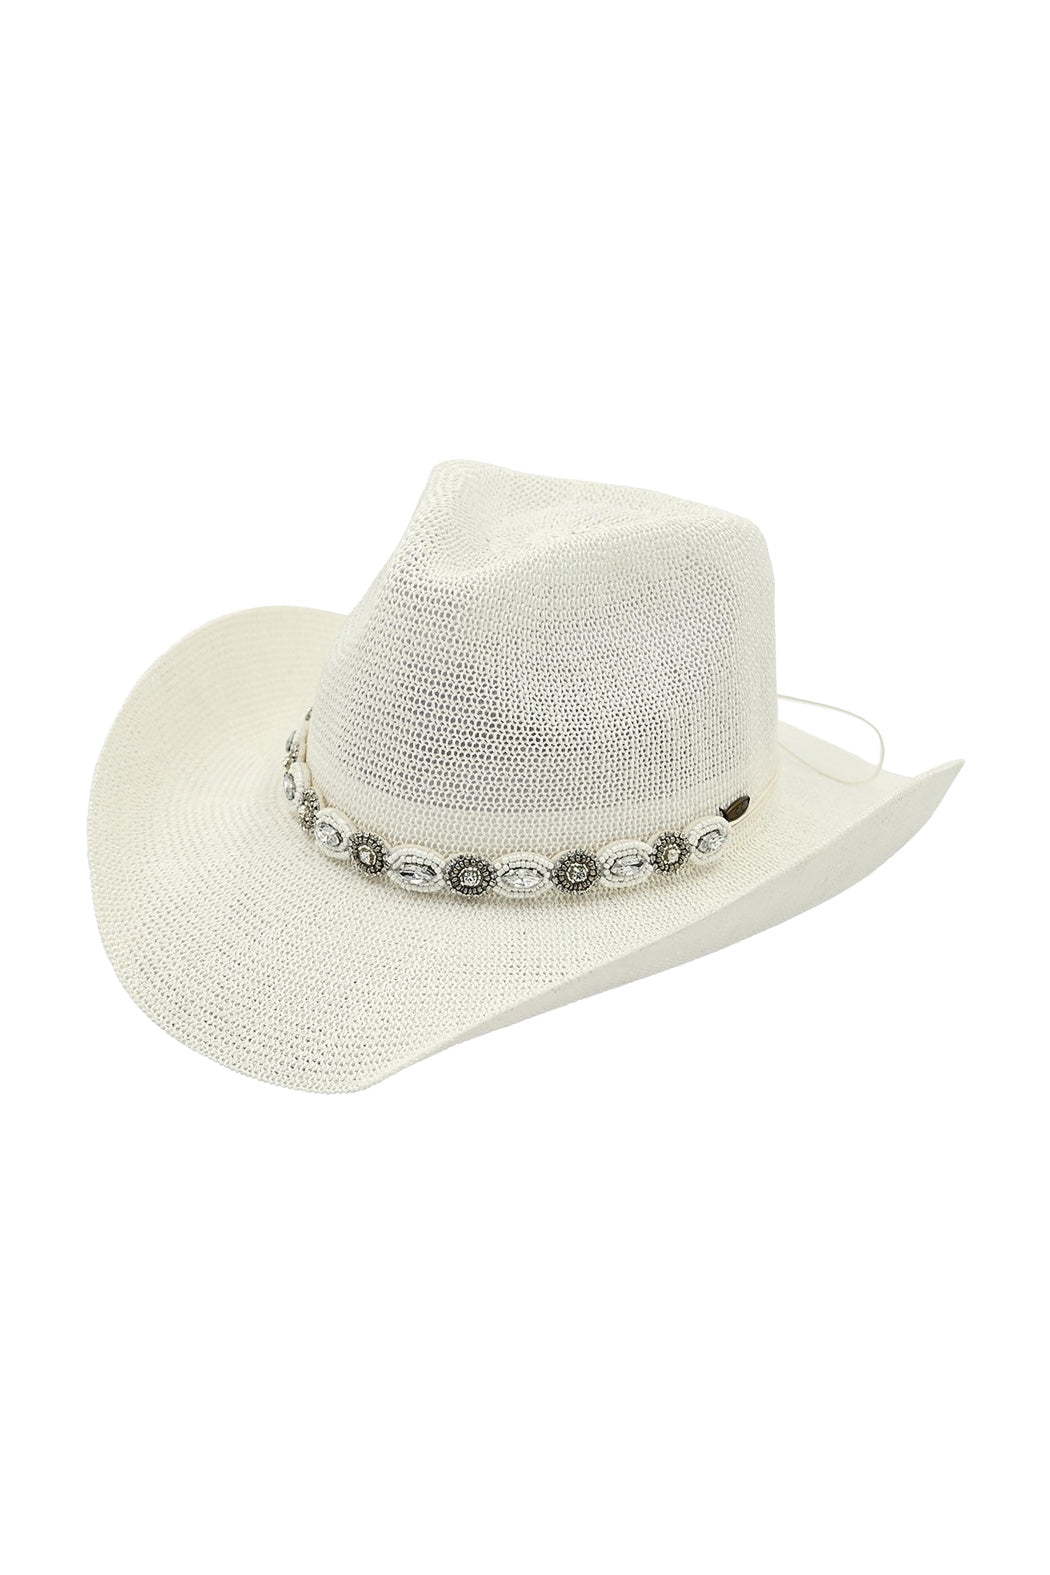 Jeweled White Cowgirl Straw Hat